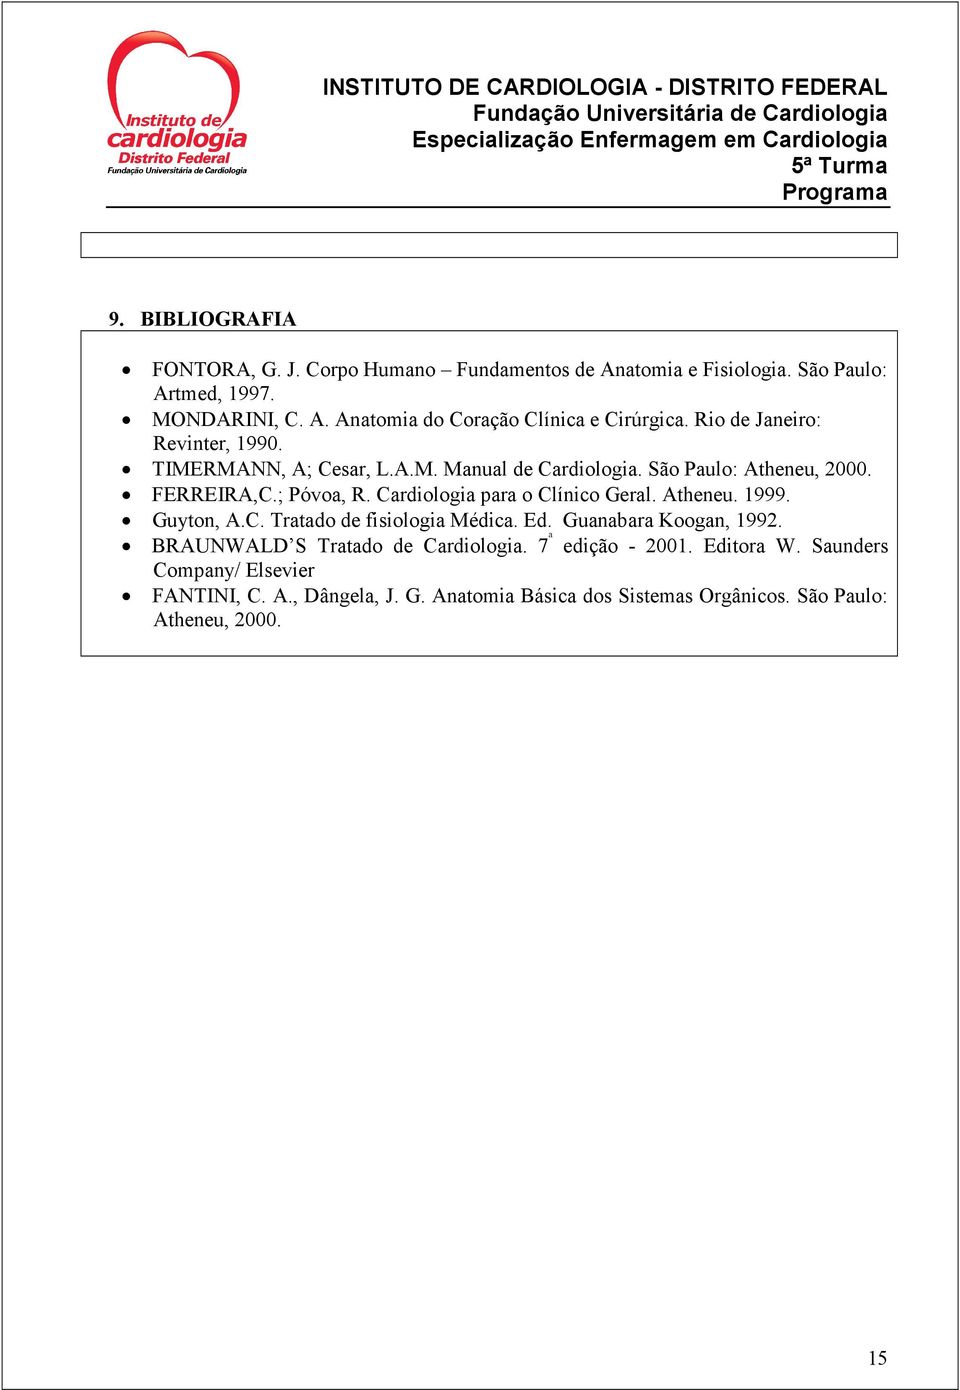 Cardiologia para o Clínico Geral. Atheneu. 1999. Guyton, A.C. Tratado de fisiologia Médica. Ed. Guanabara Koogan, 1992.